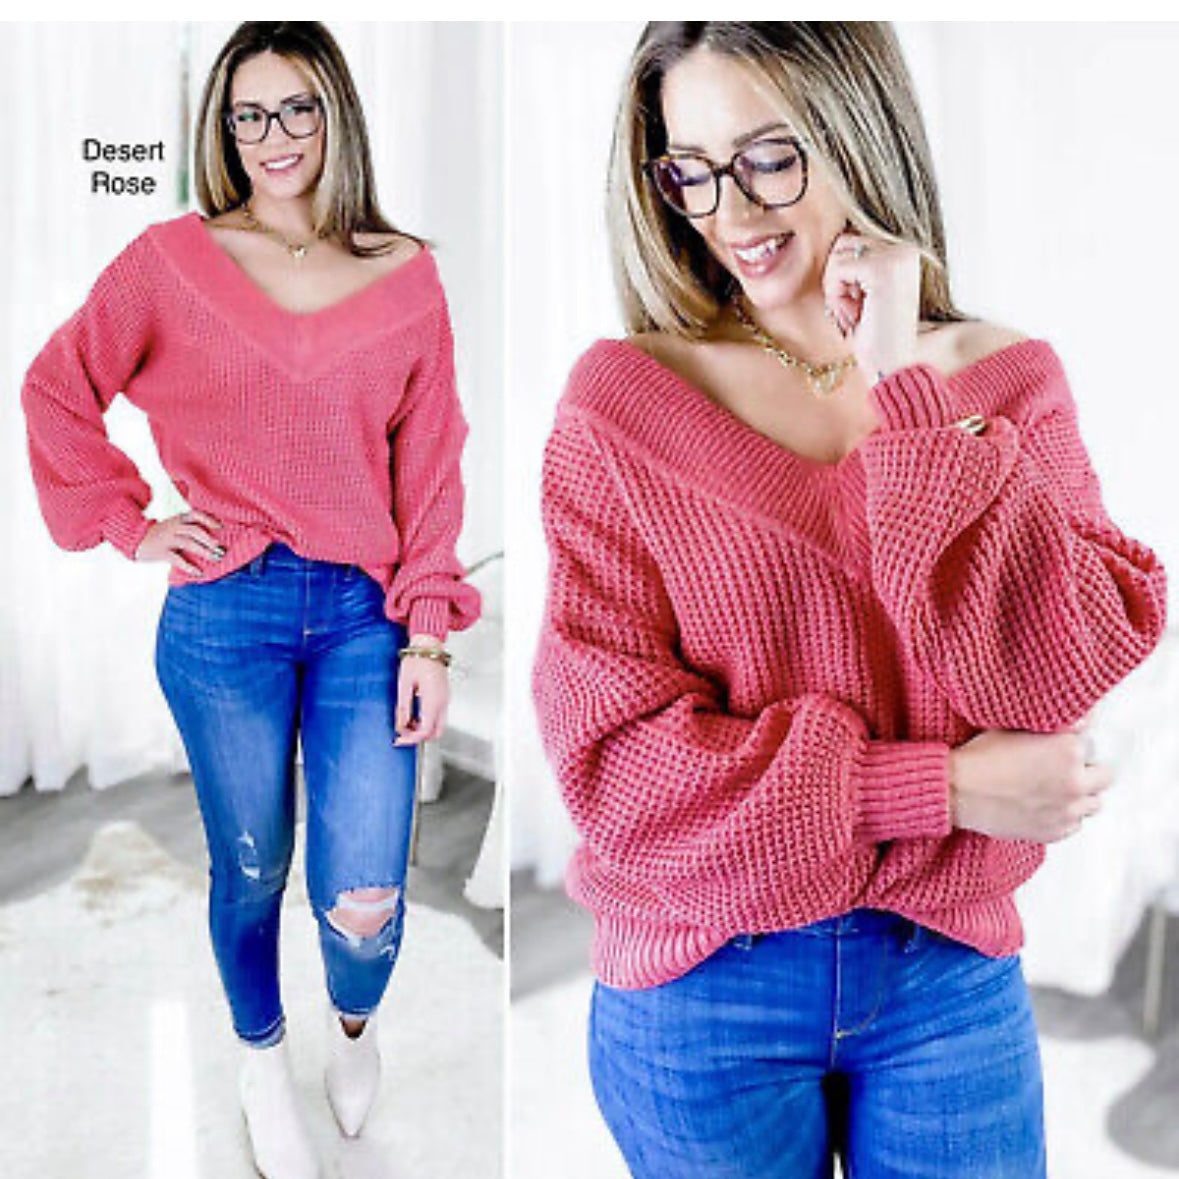 Hot Pink Oversized Sweater  Pink oversized sweater, Hot pink sweater  outfit, Pink sweater outfit fall